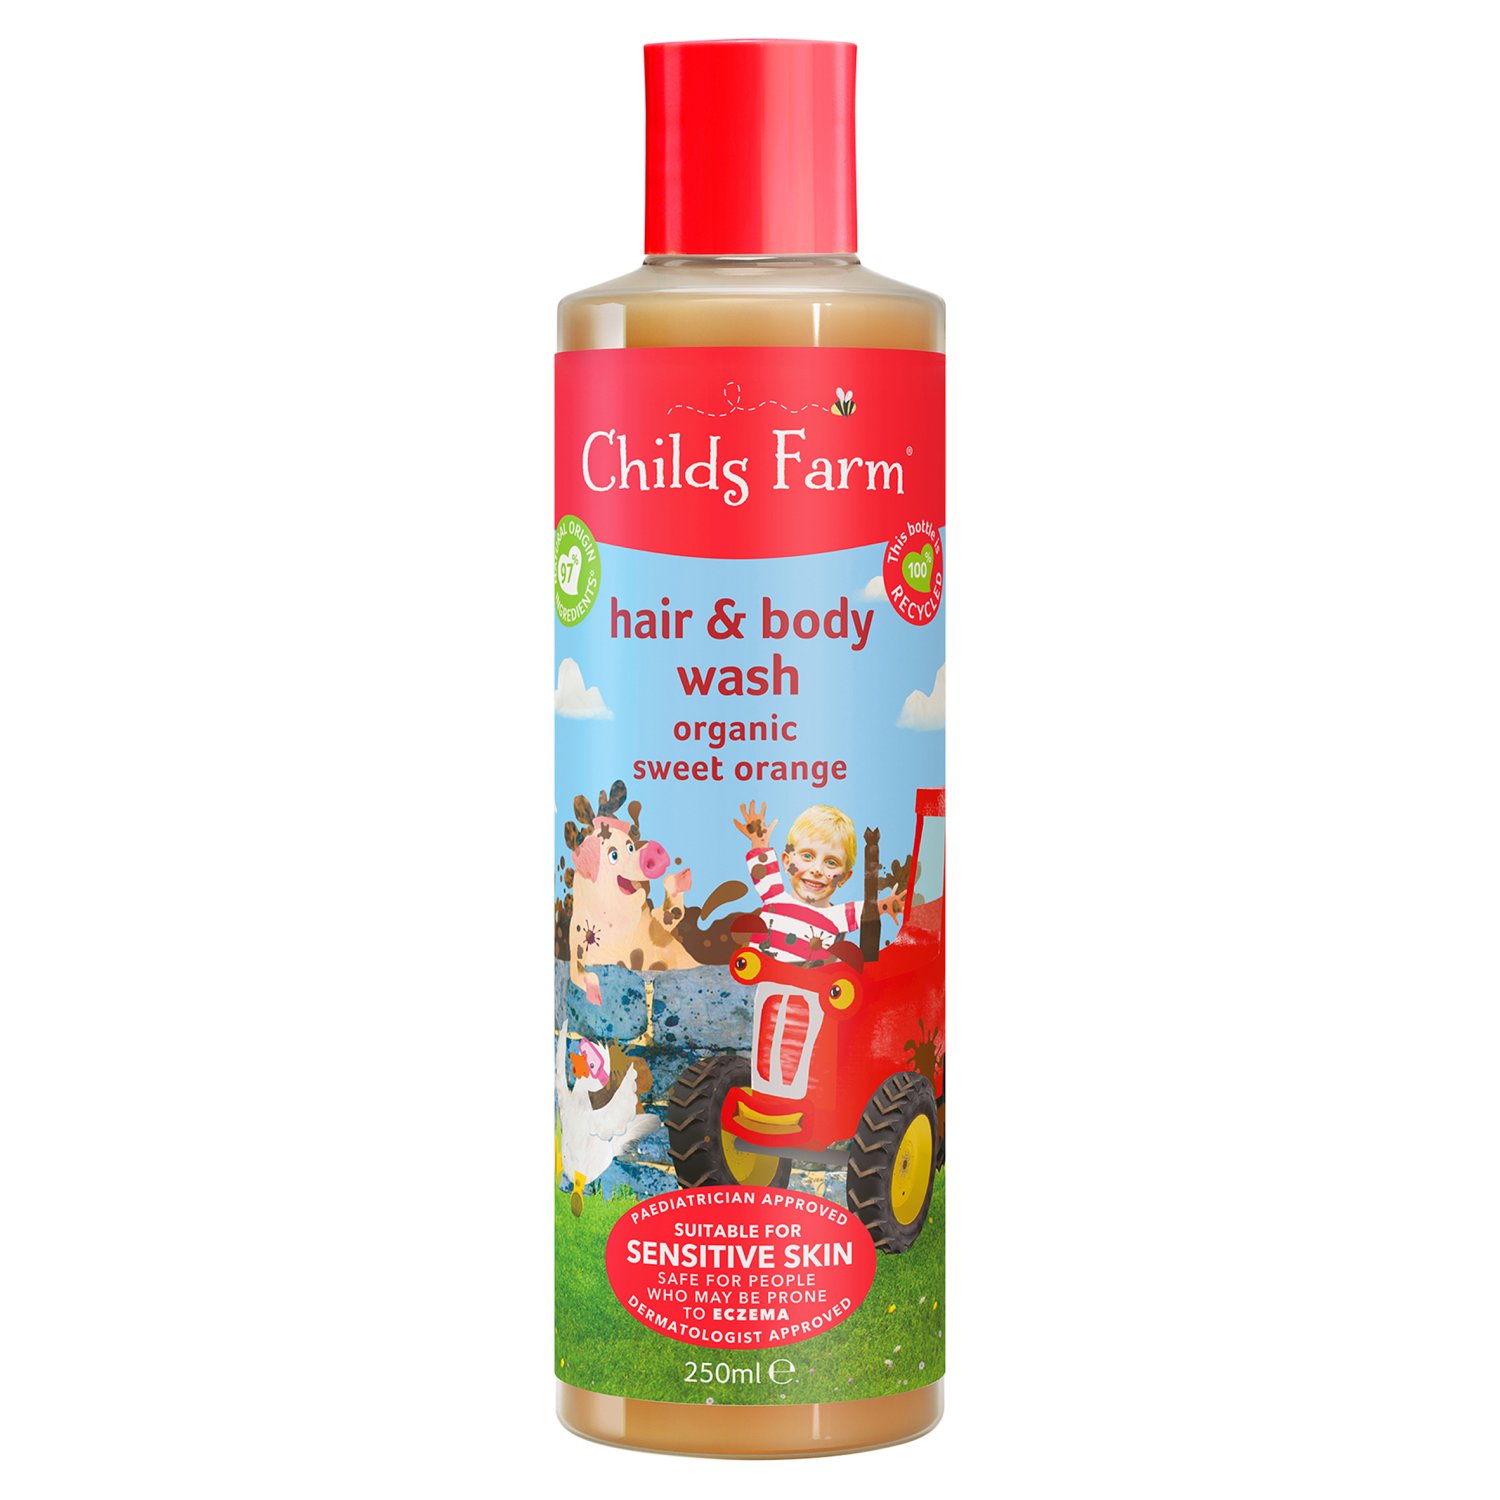 Childs Farm Sweet Orange Hair & Body Wash (250 ml)